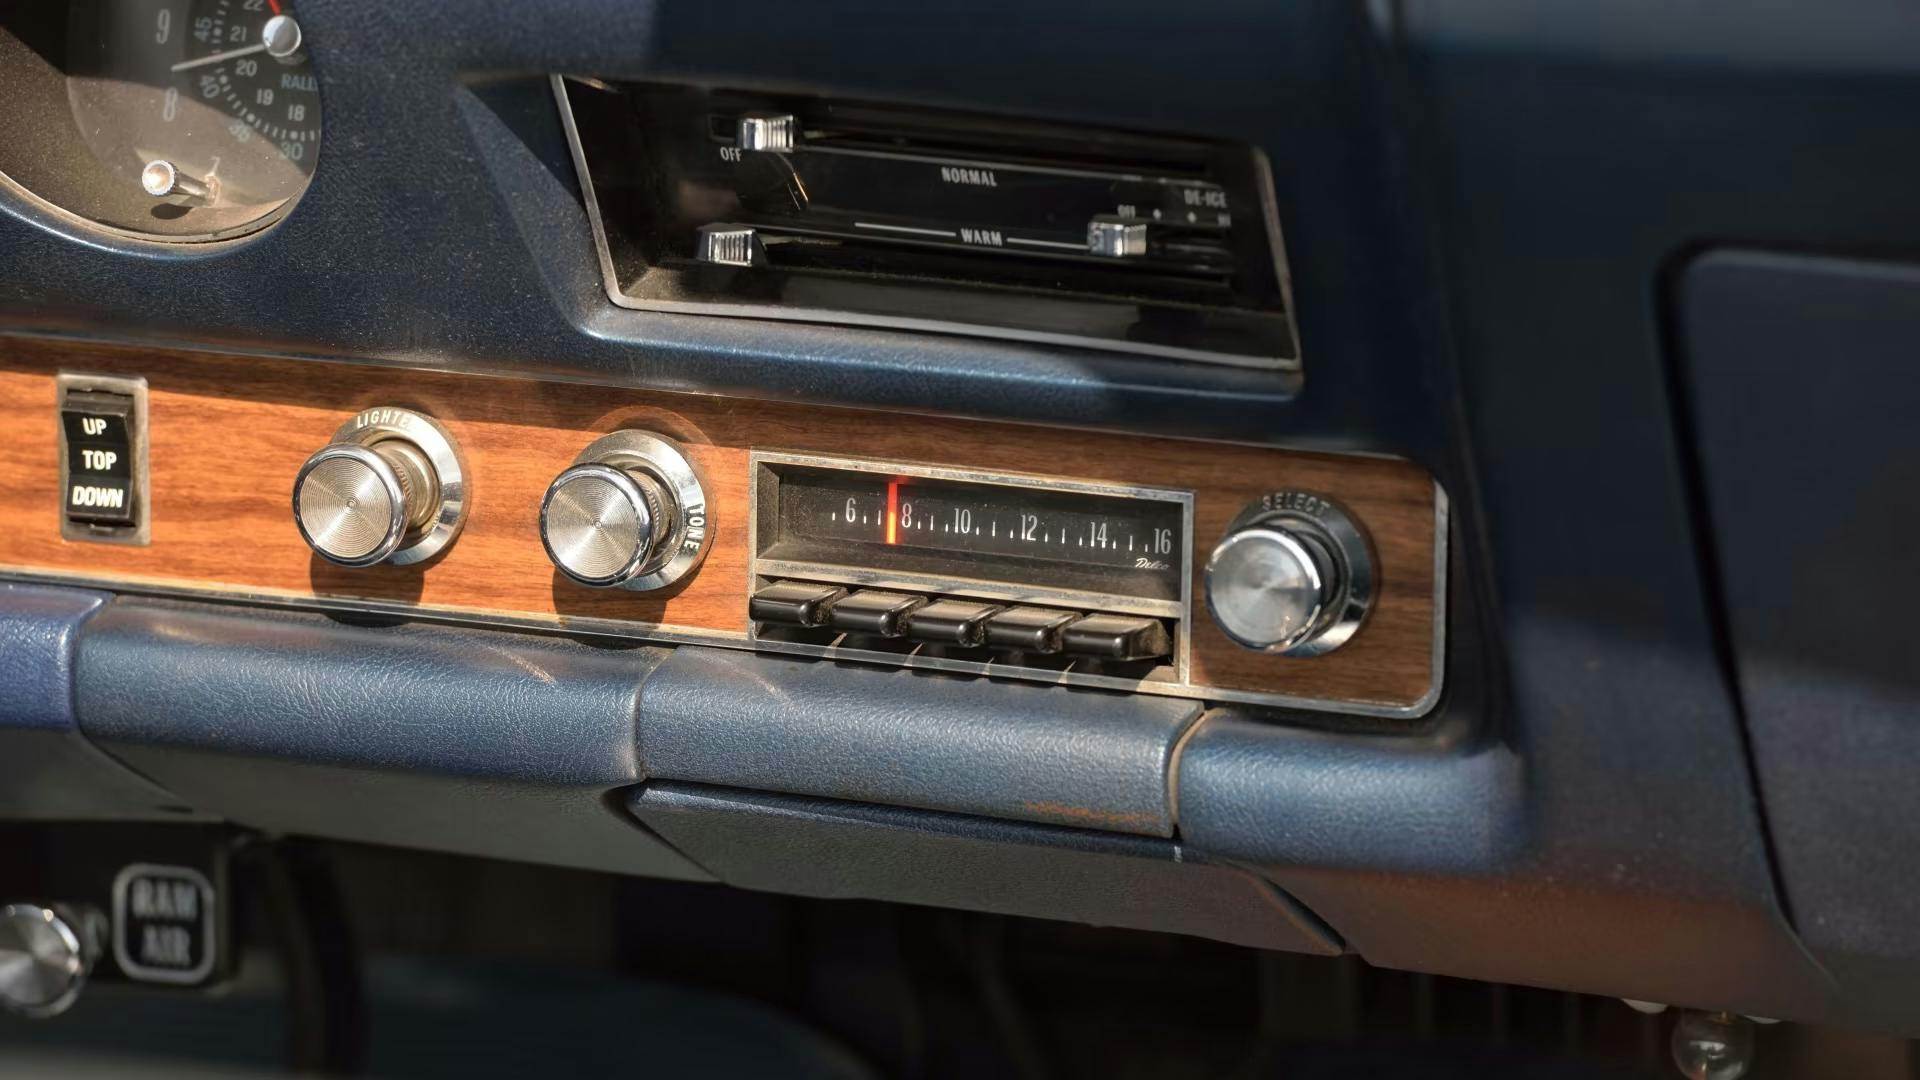 1969 Pontiac GTO Ram Air IV Convertible interior dash radio